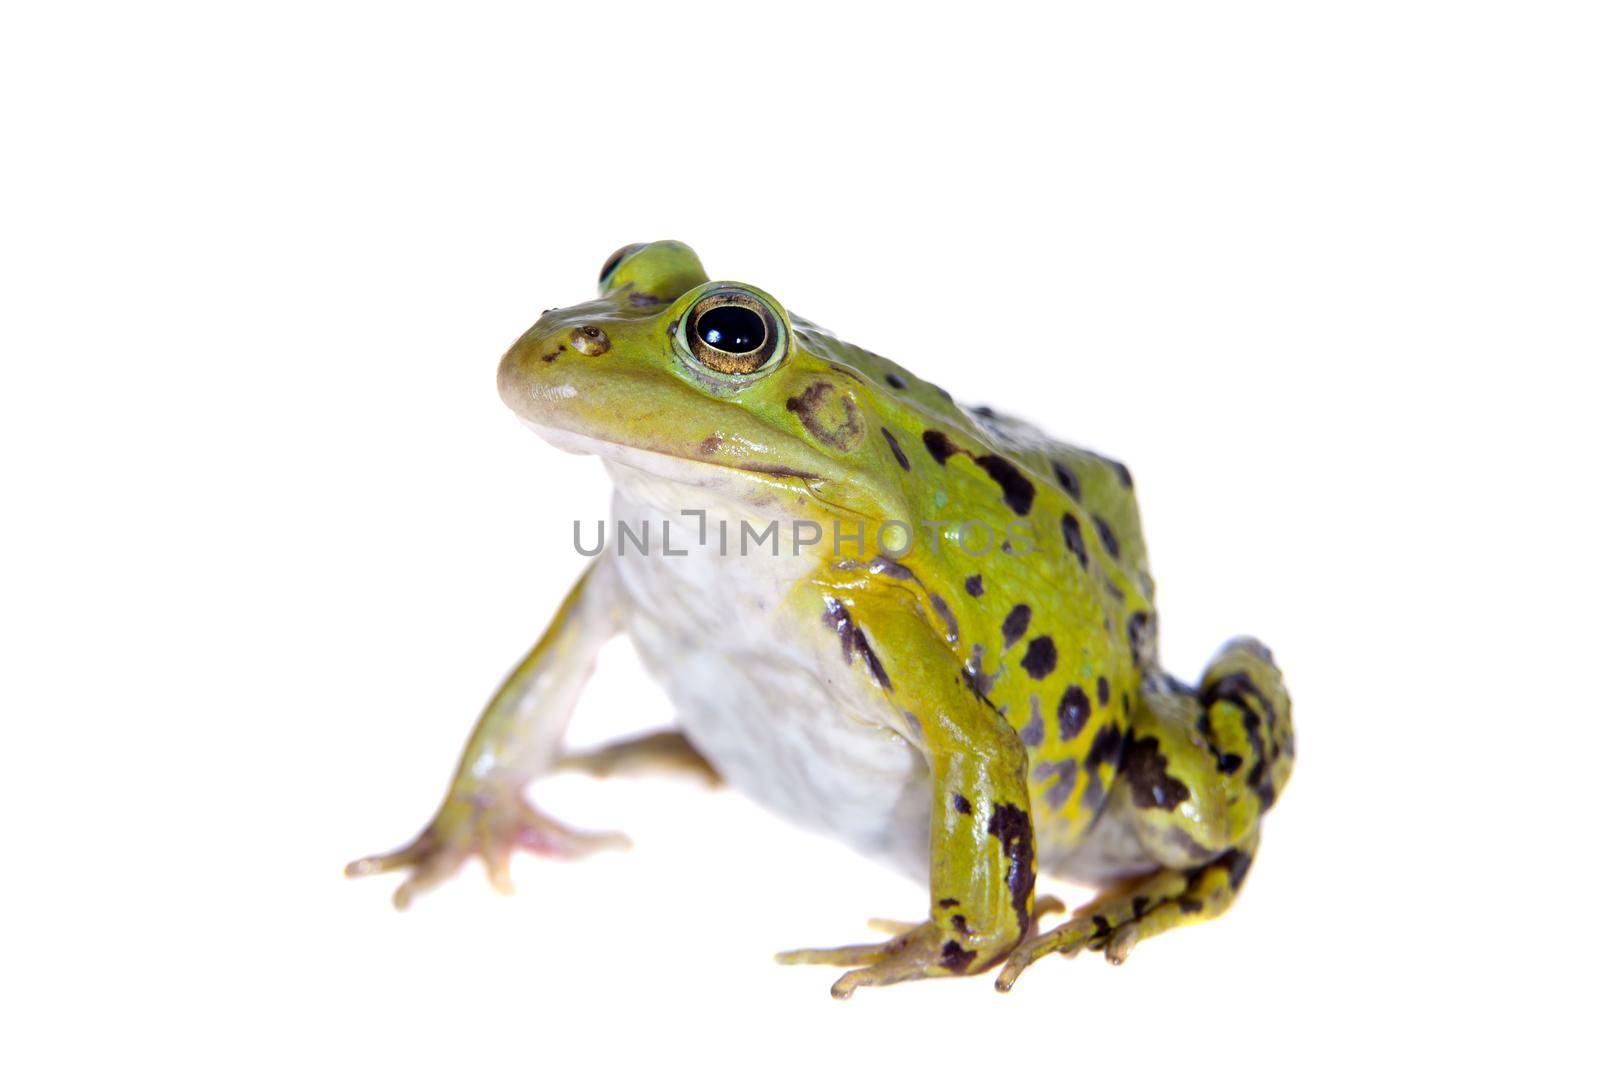 Pool frog isolated on white background, Pelophylax lessonae